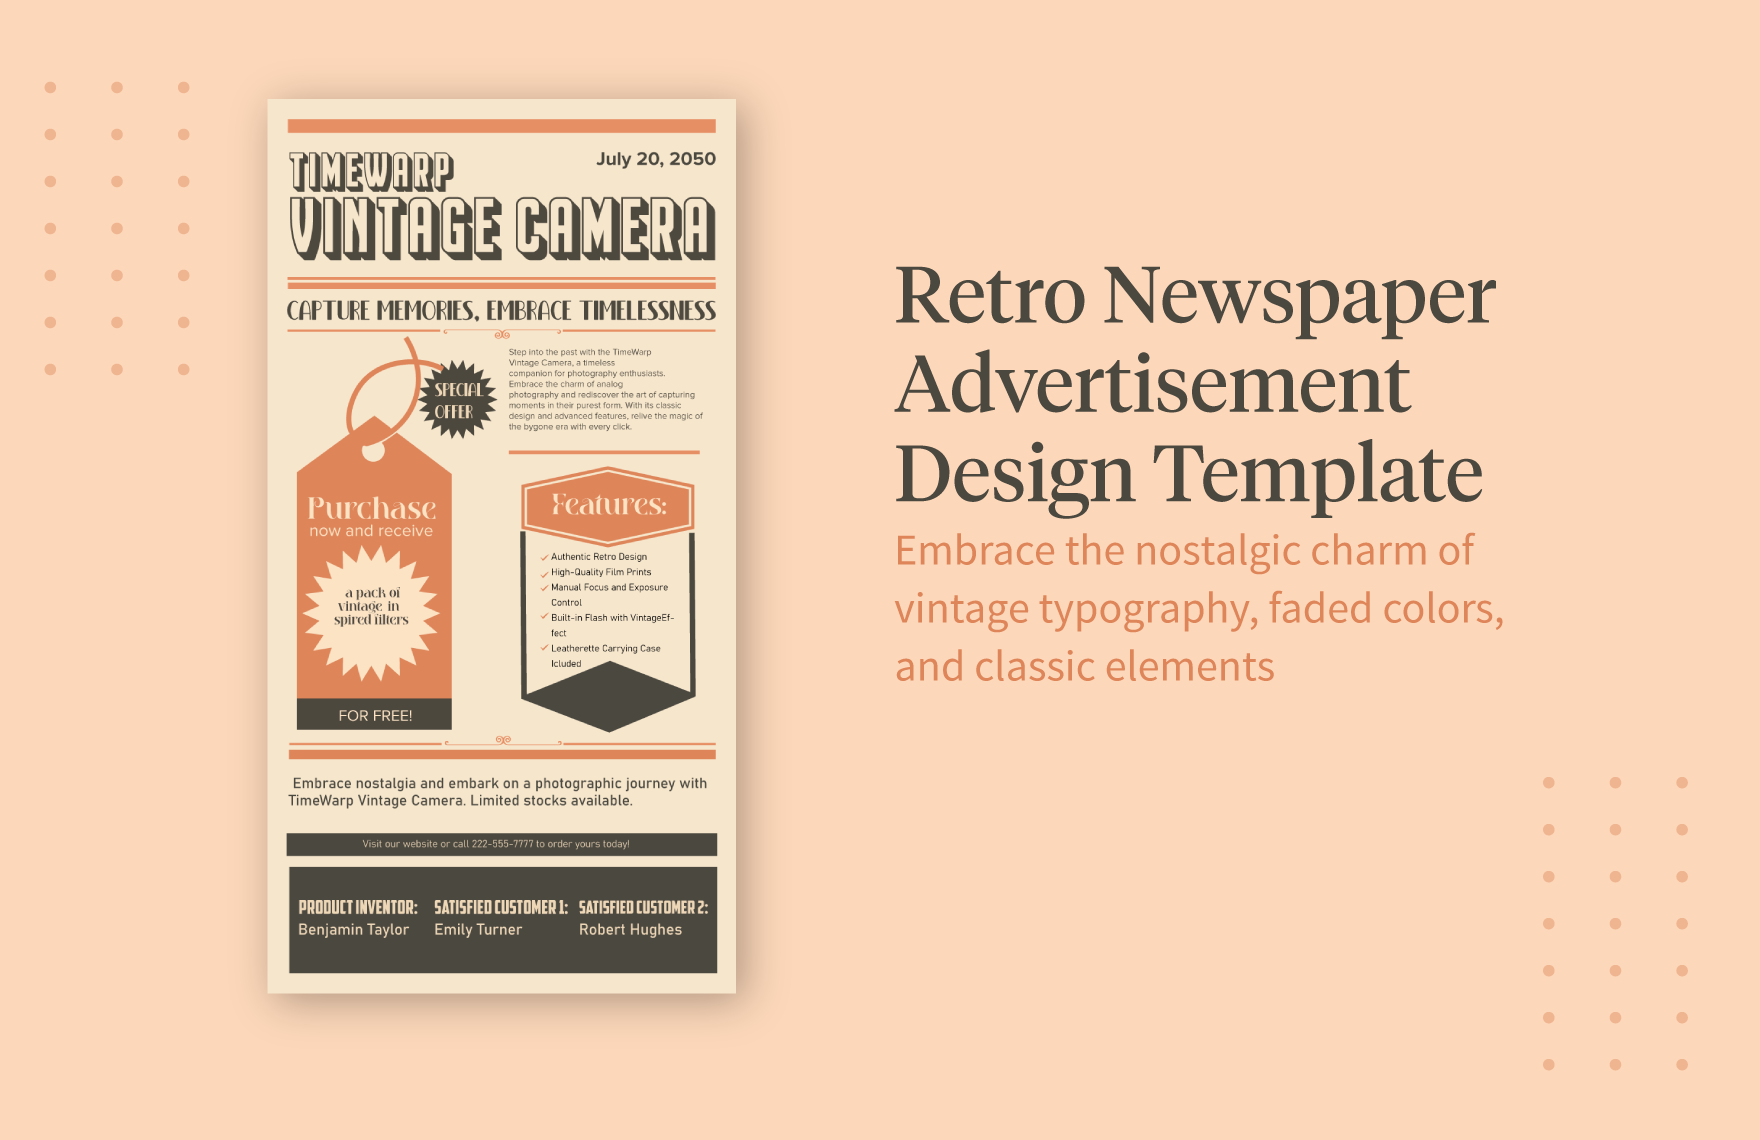 retro-newspaper-advertisement-design